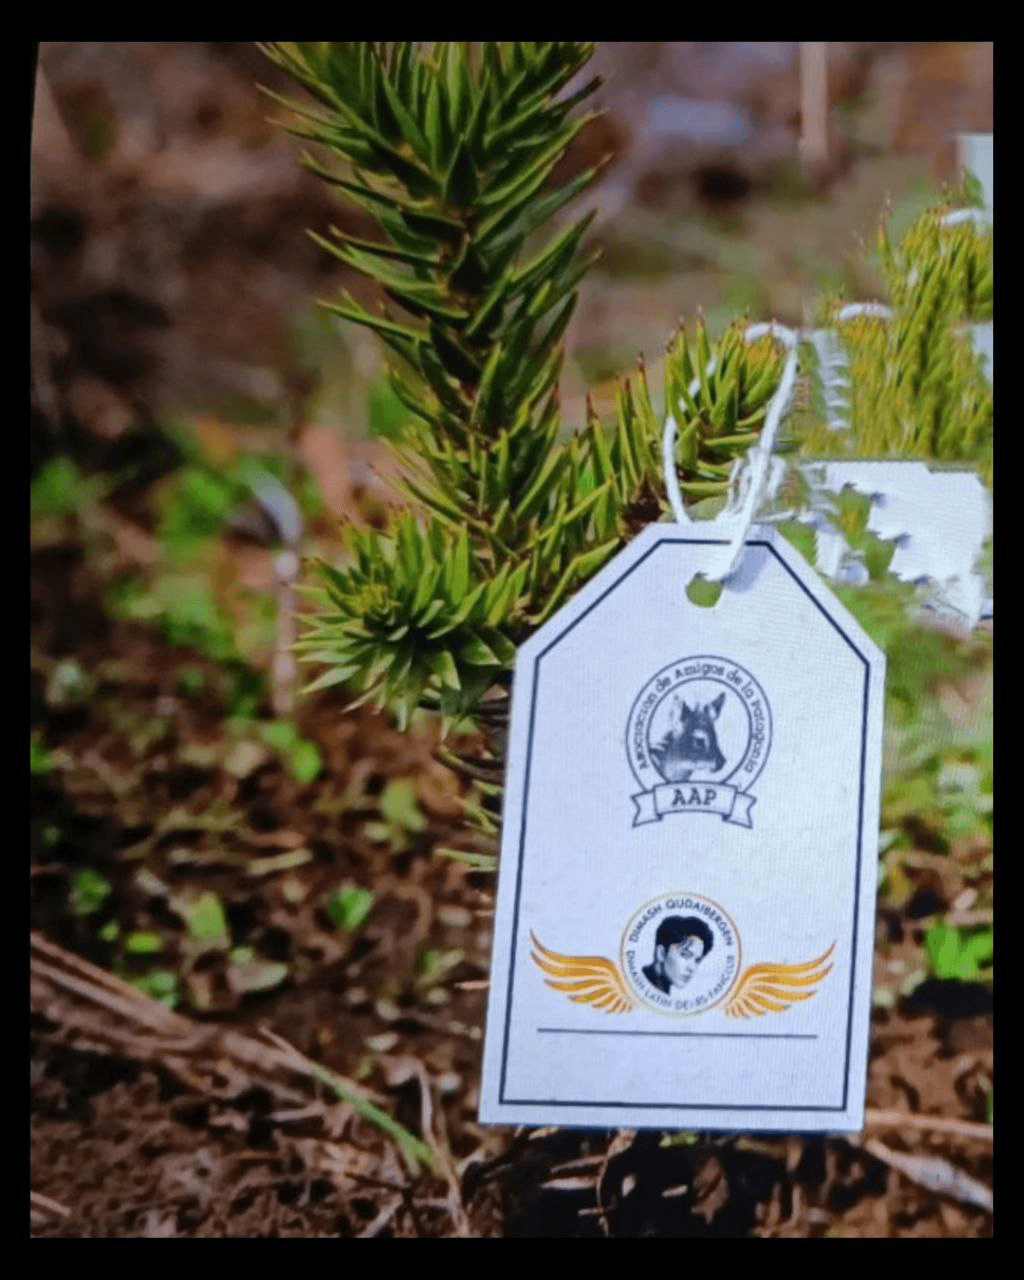 Поклонники Димаша посадили 1000 деревьев в Аргентине